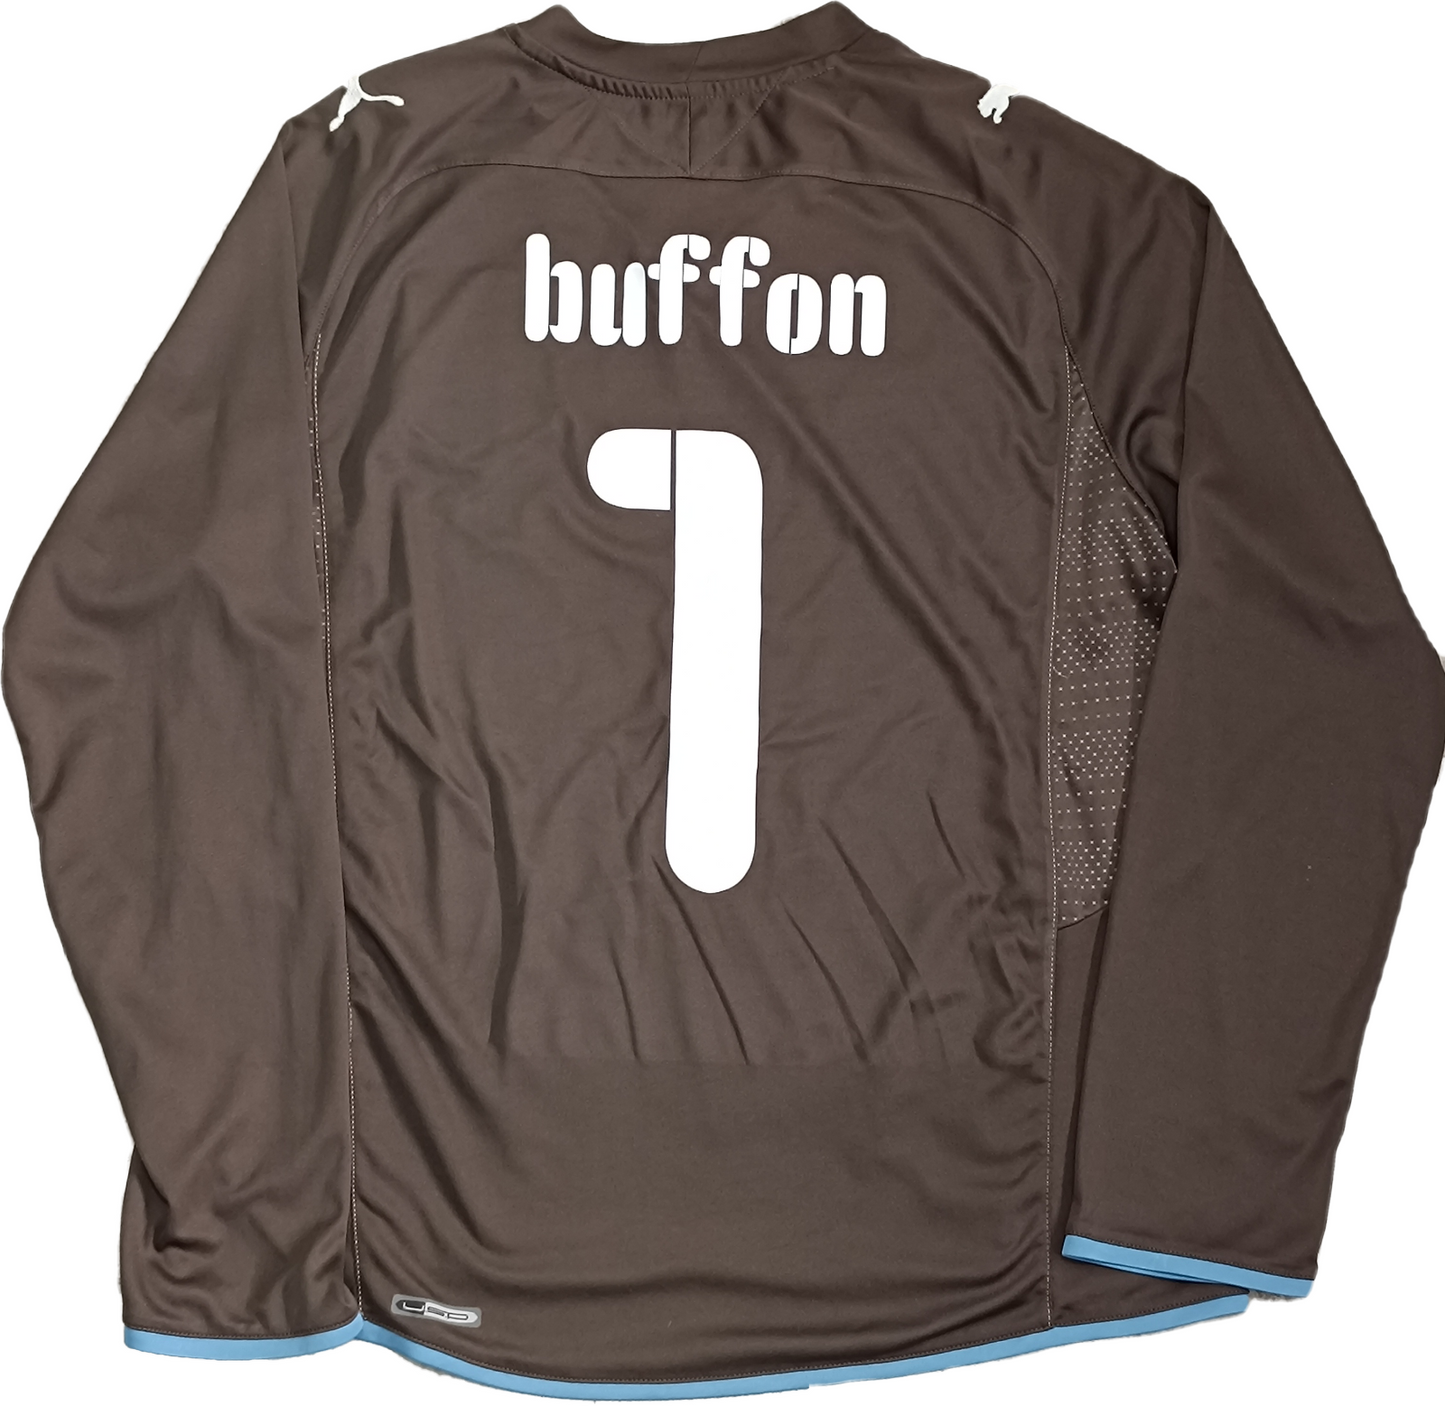 maglia calcio vintage Italia Puma King 2009 Confederations CUP BUFFON Limited